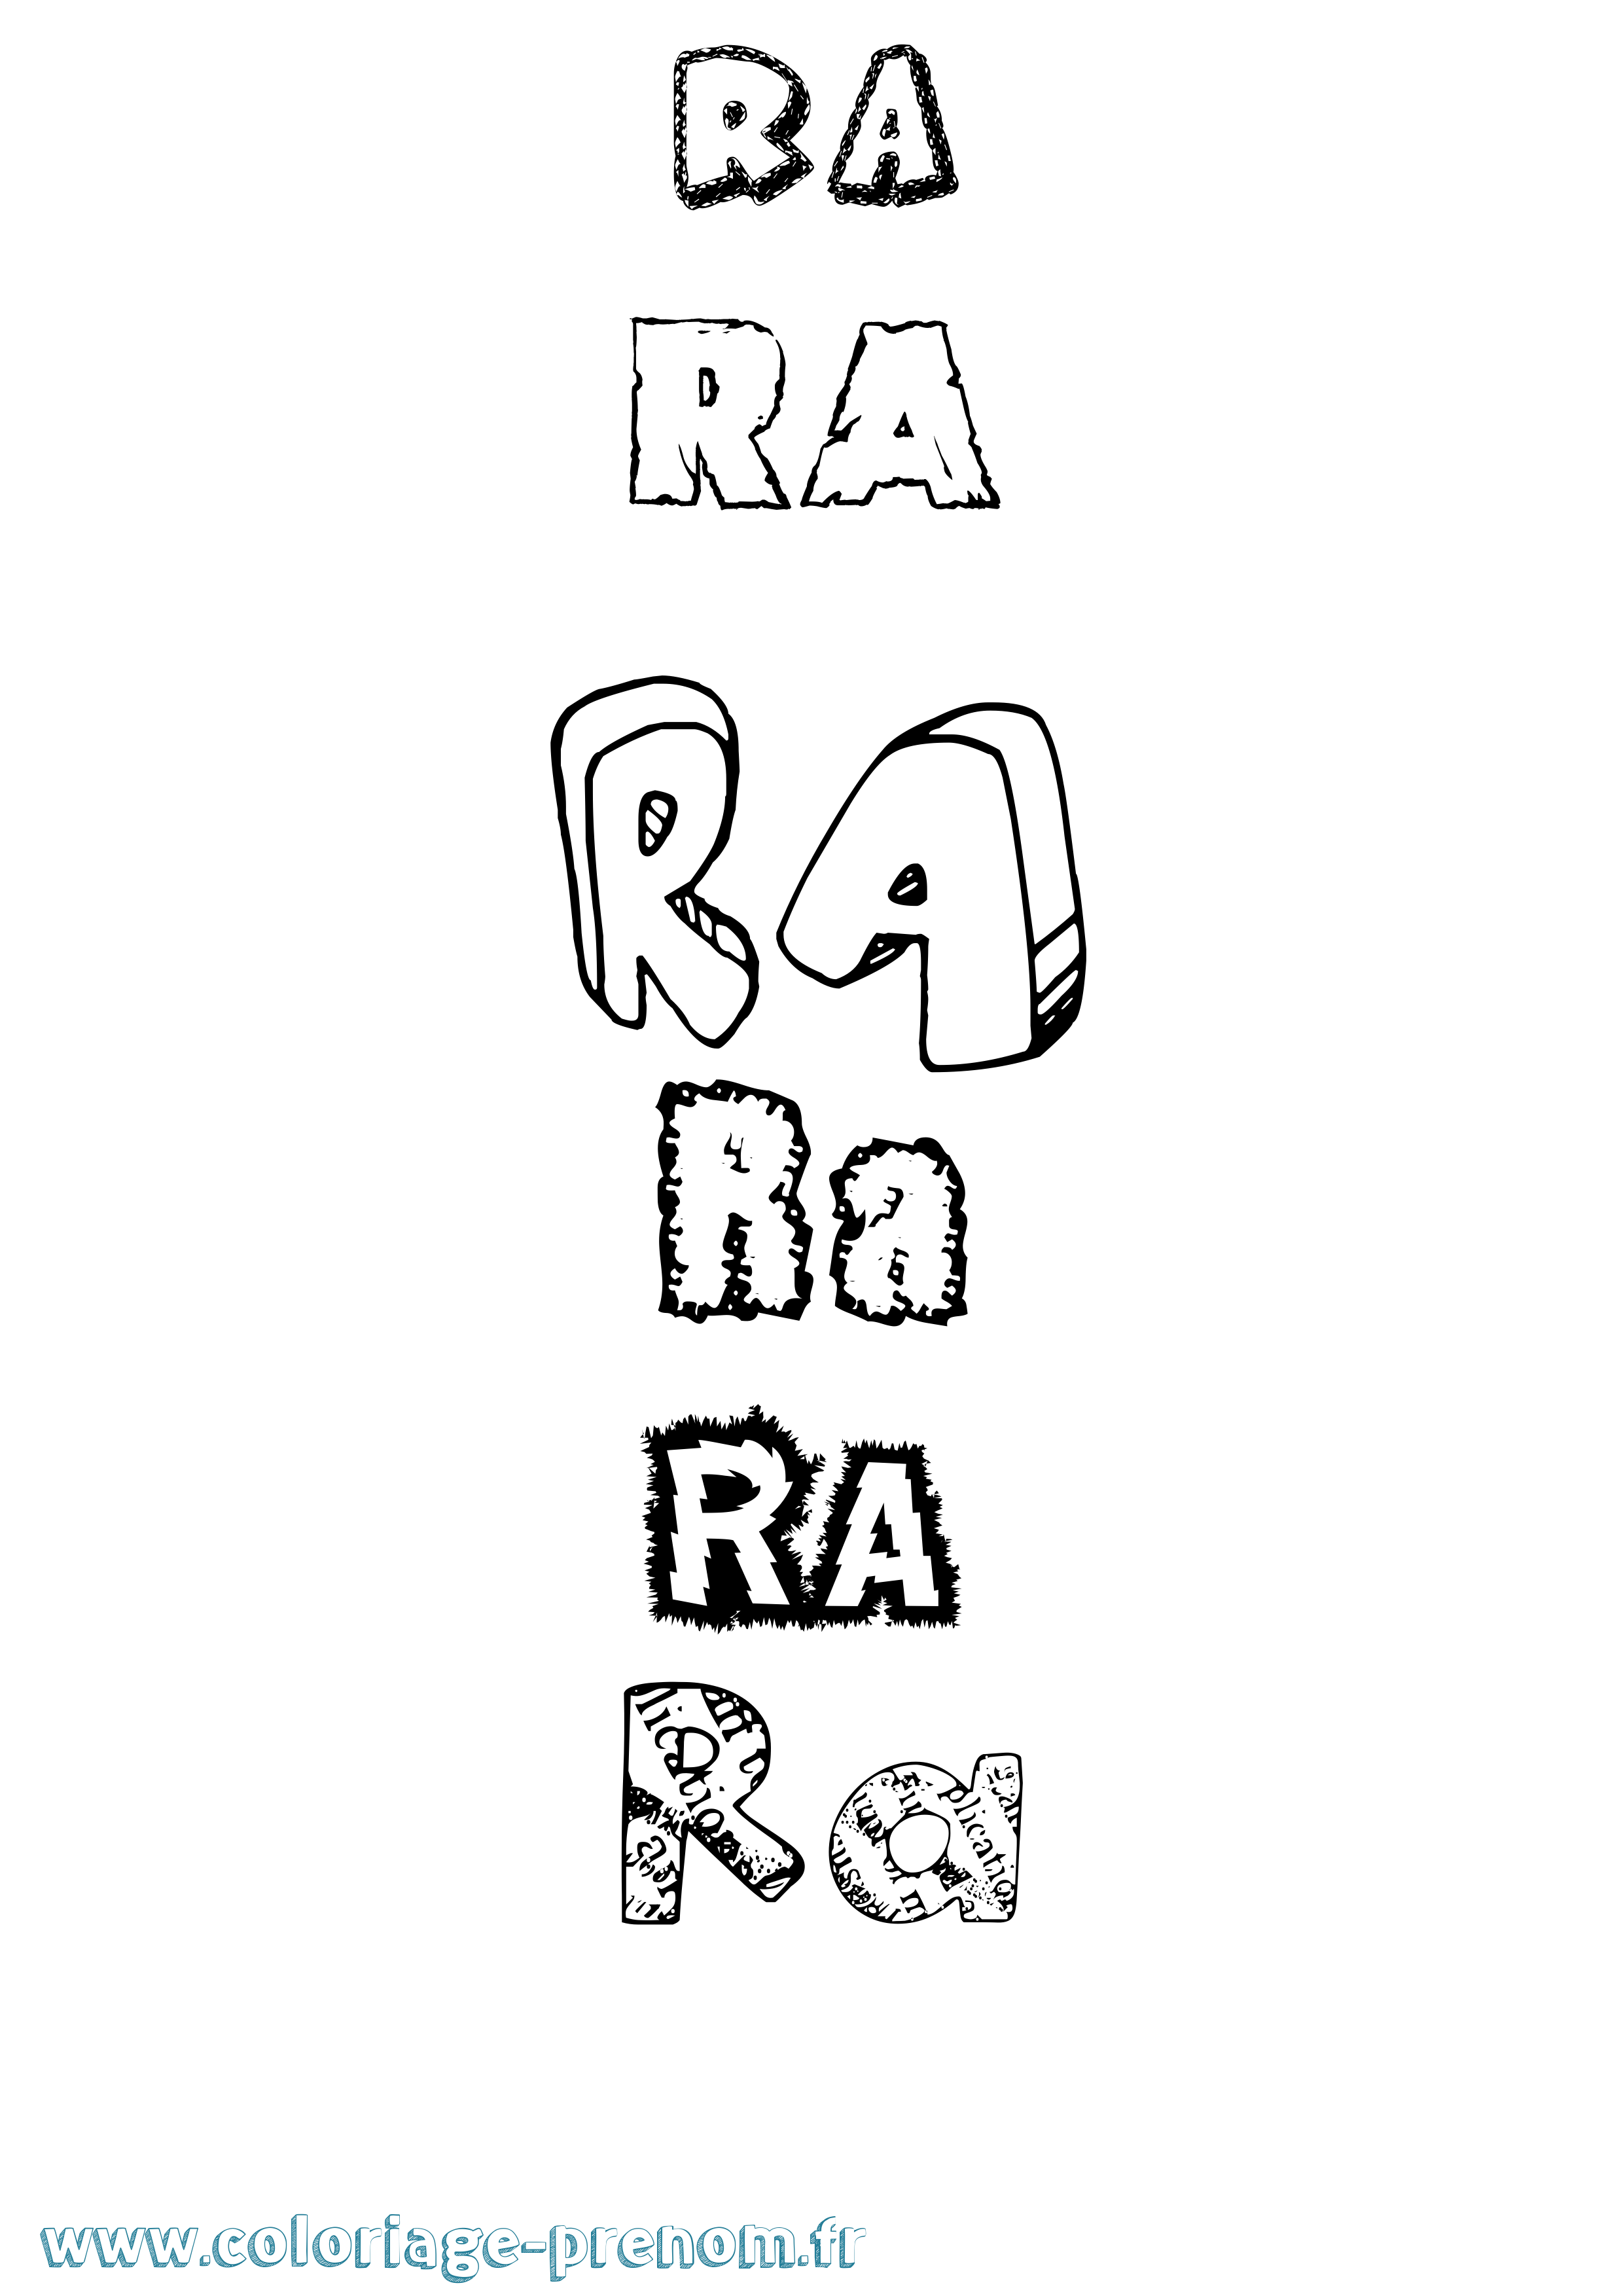 Coloriage prénom Ra Destructuré